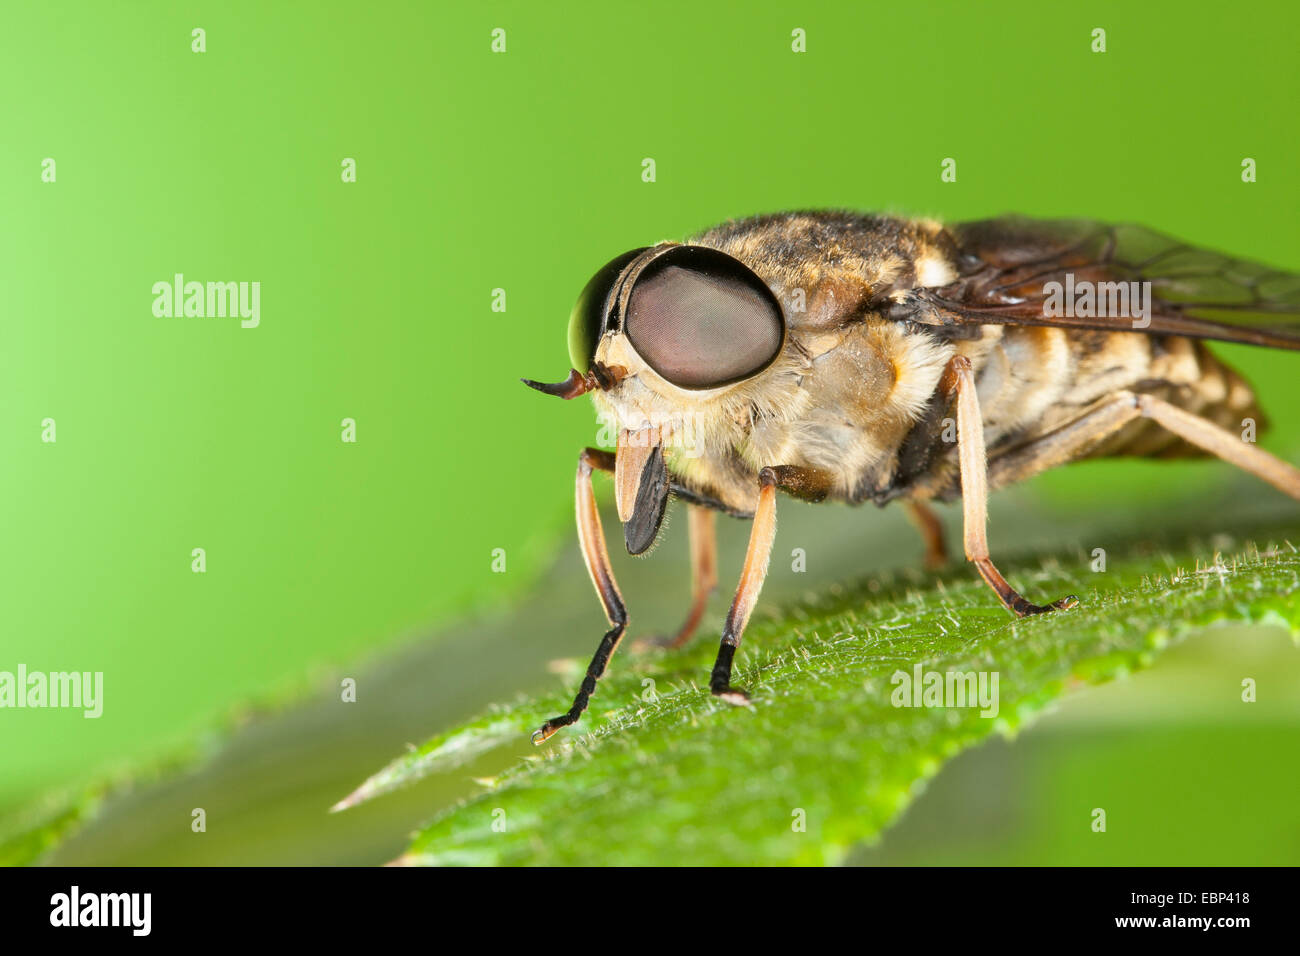 horsefly (Tabanus sudeticus), portrait with compound eyes and stinging mouthparts, Germany Stock Photo